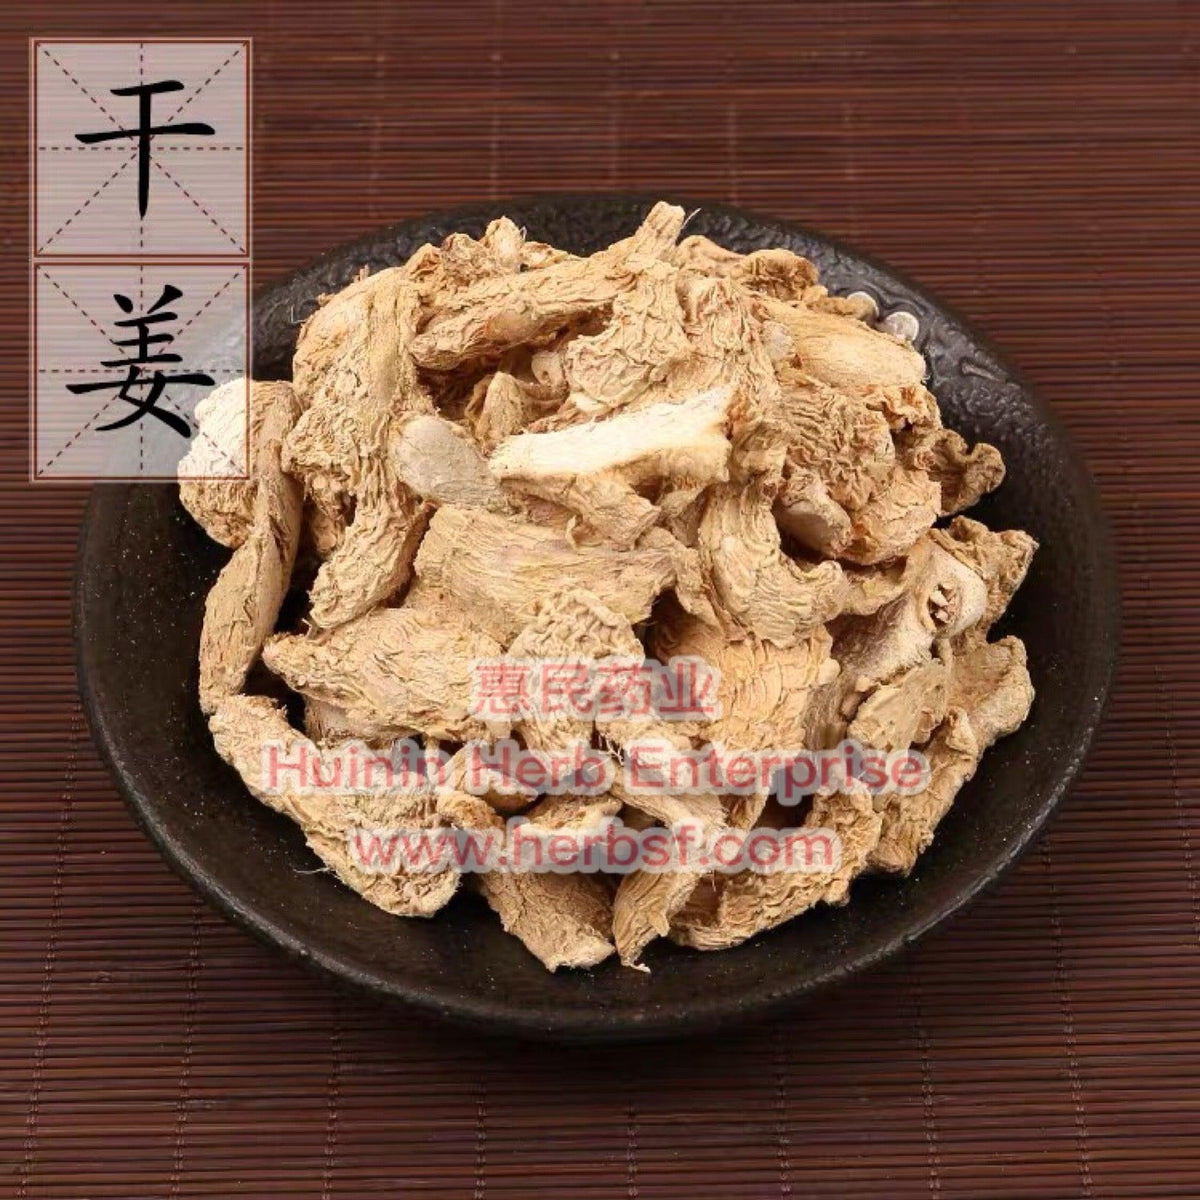 Gan Jiang 4oz - Huimin Herb Online, LLC